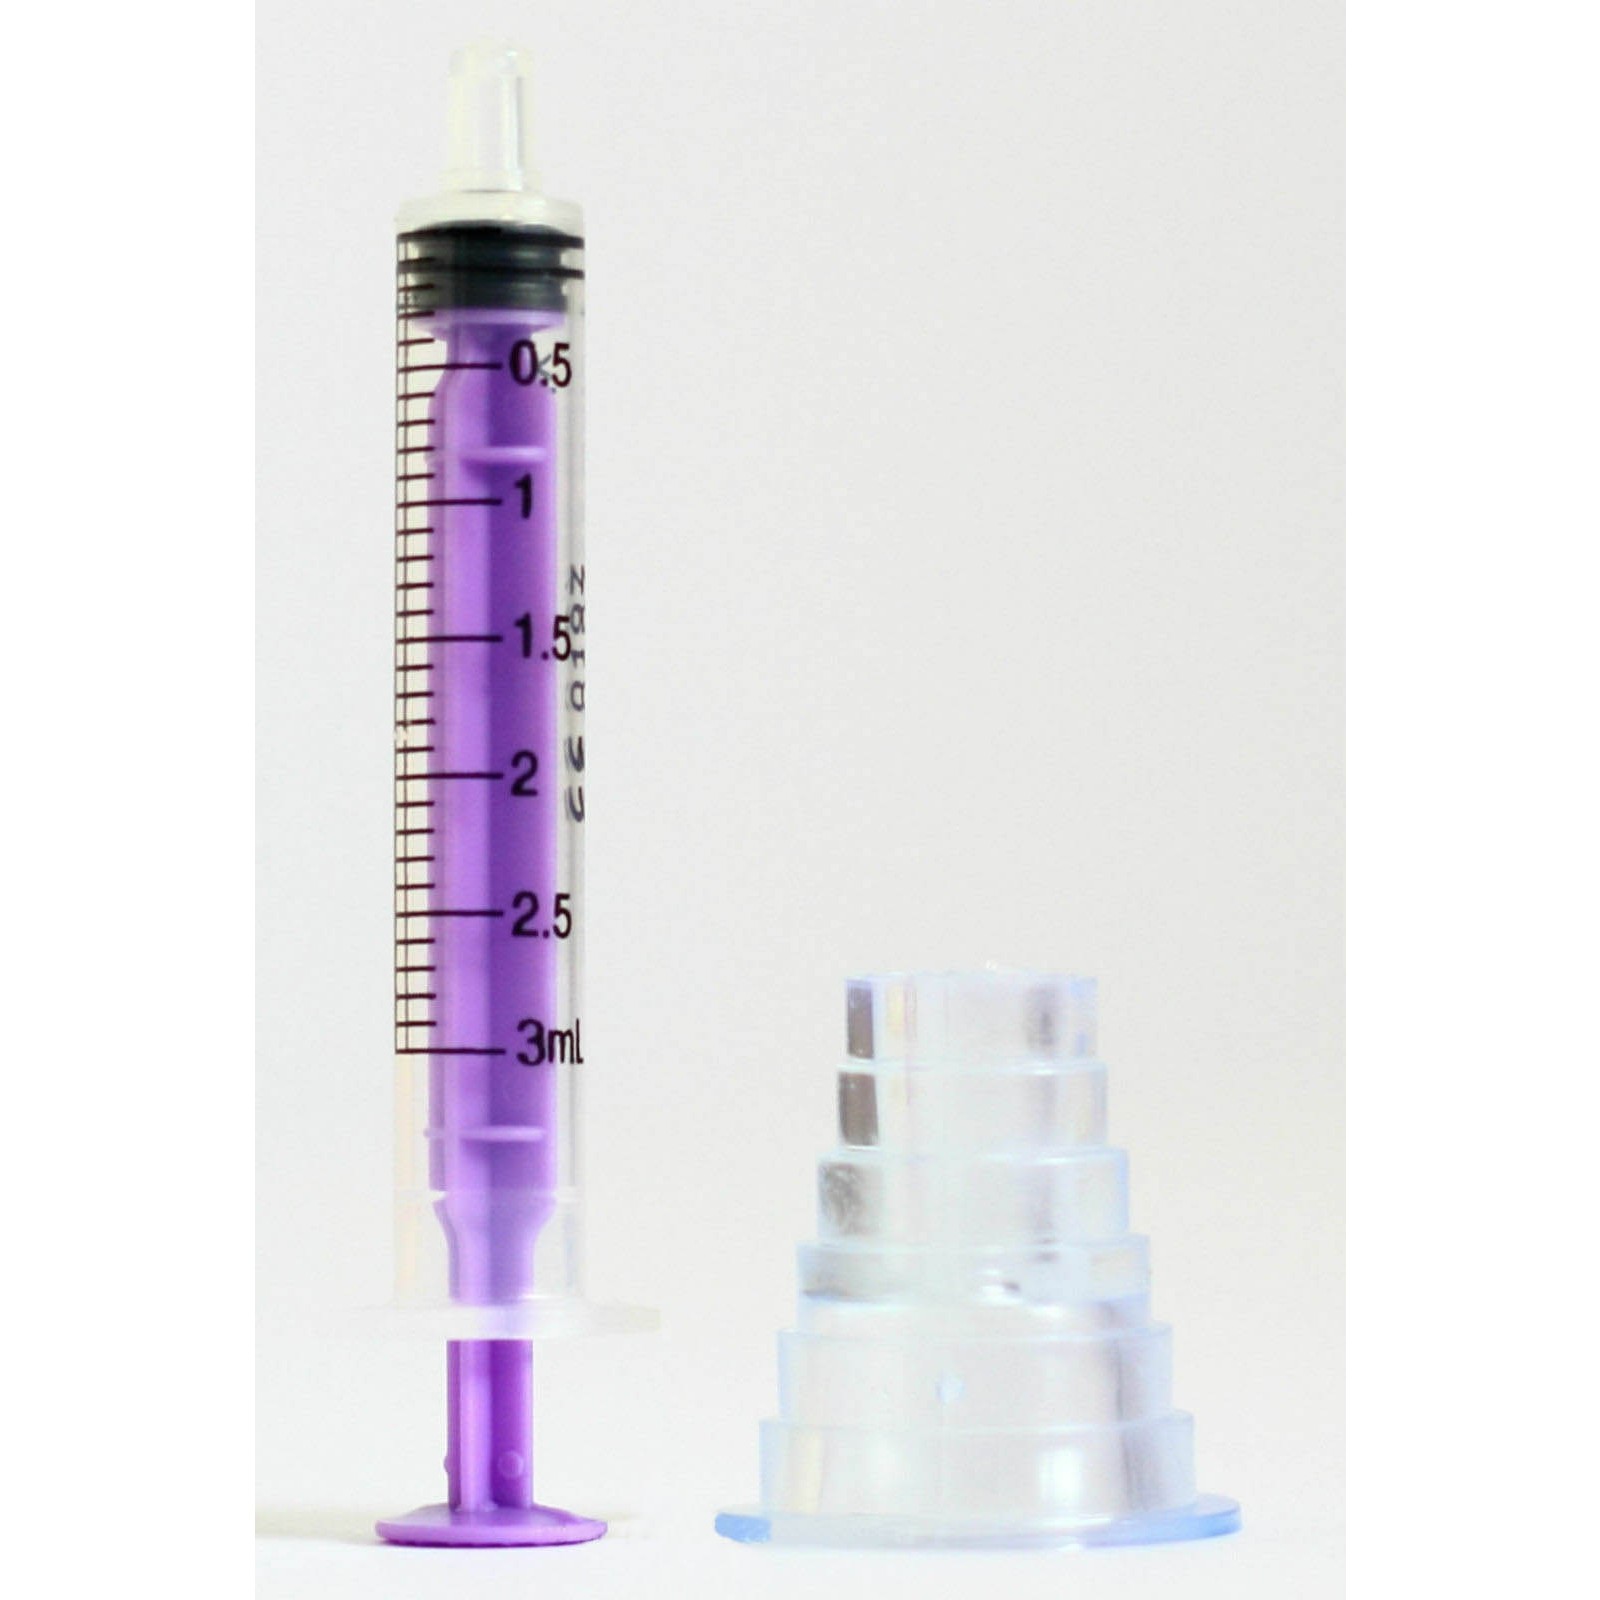 Terumo Syringe 3ml - for Oral